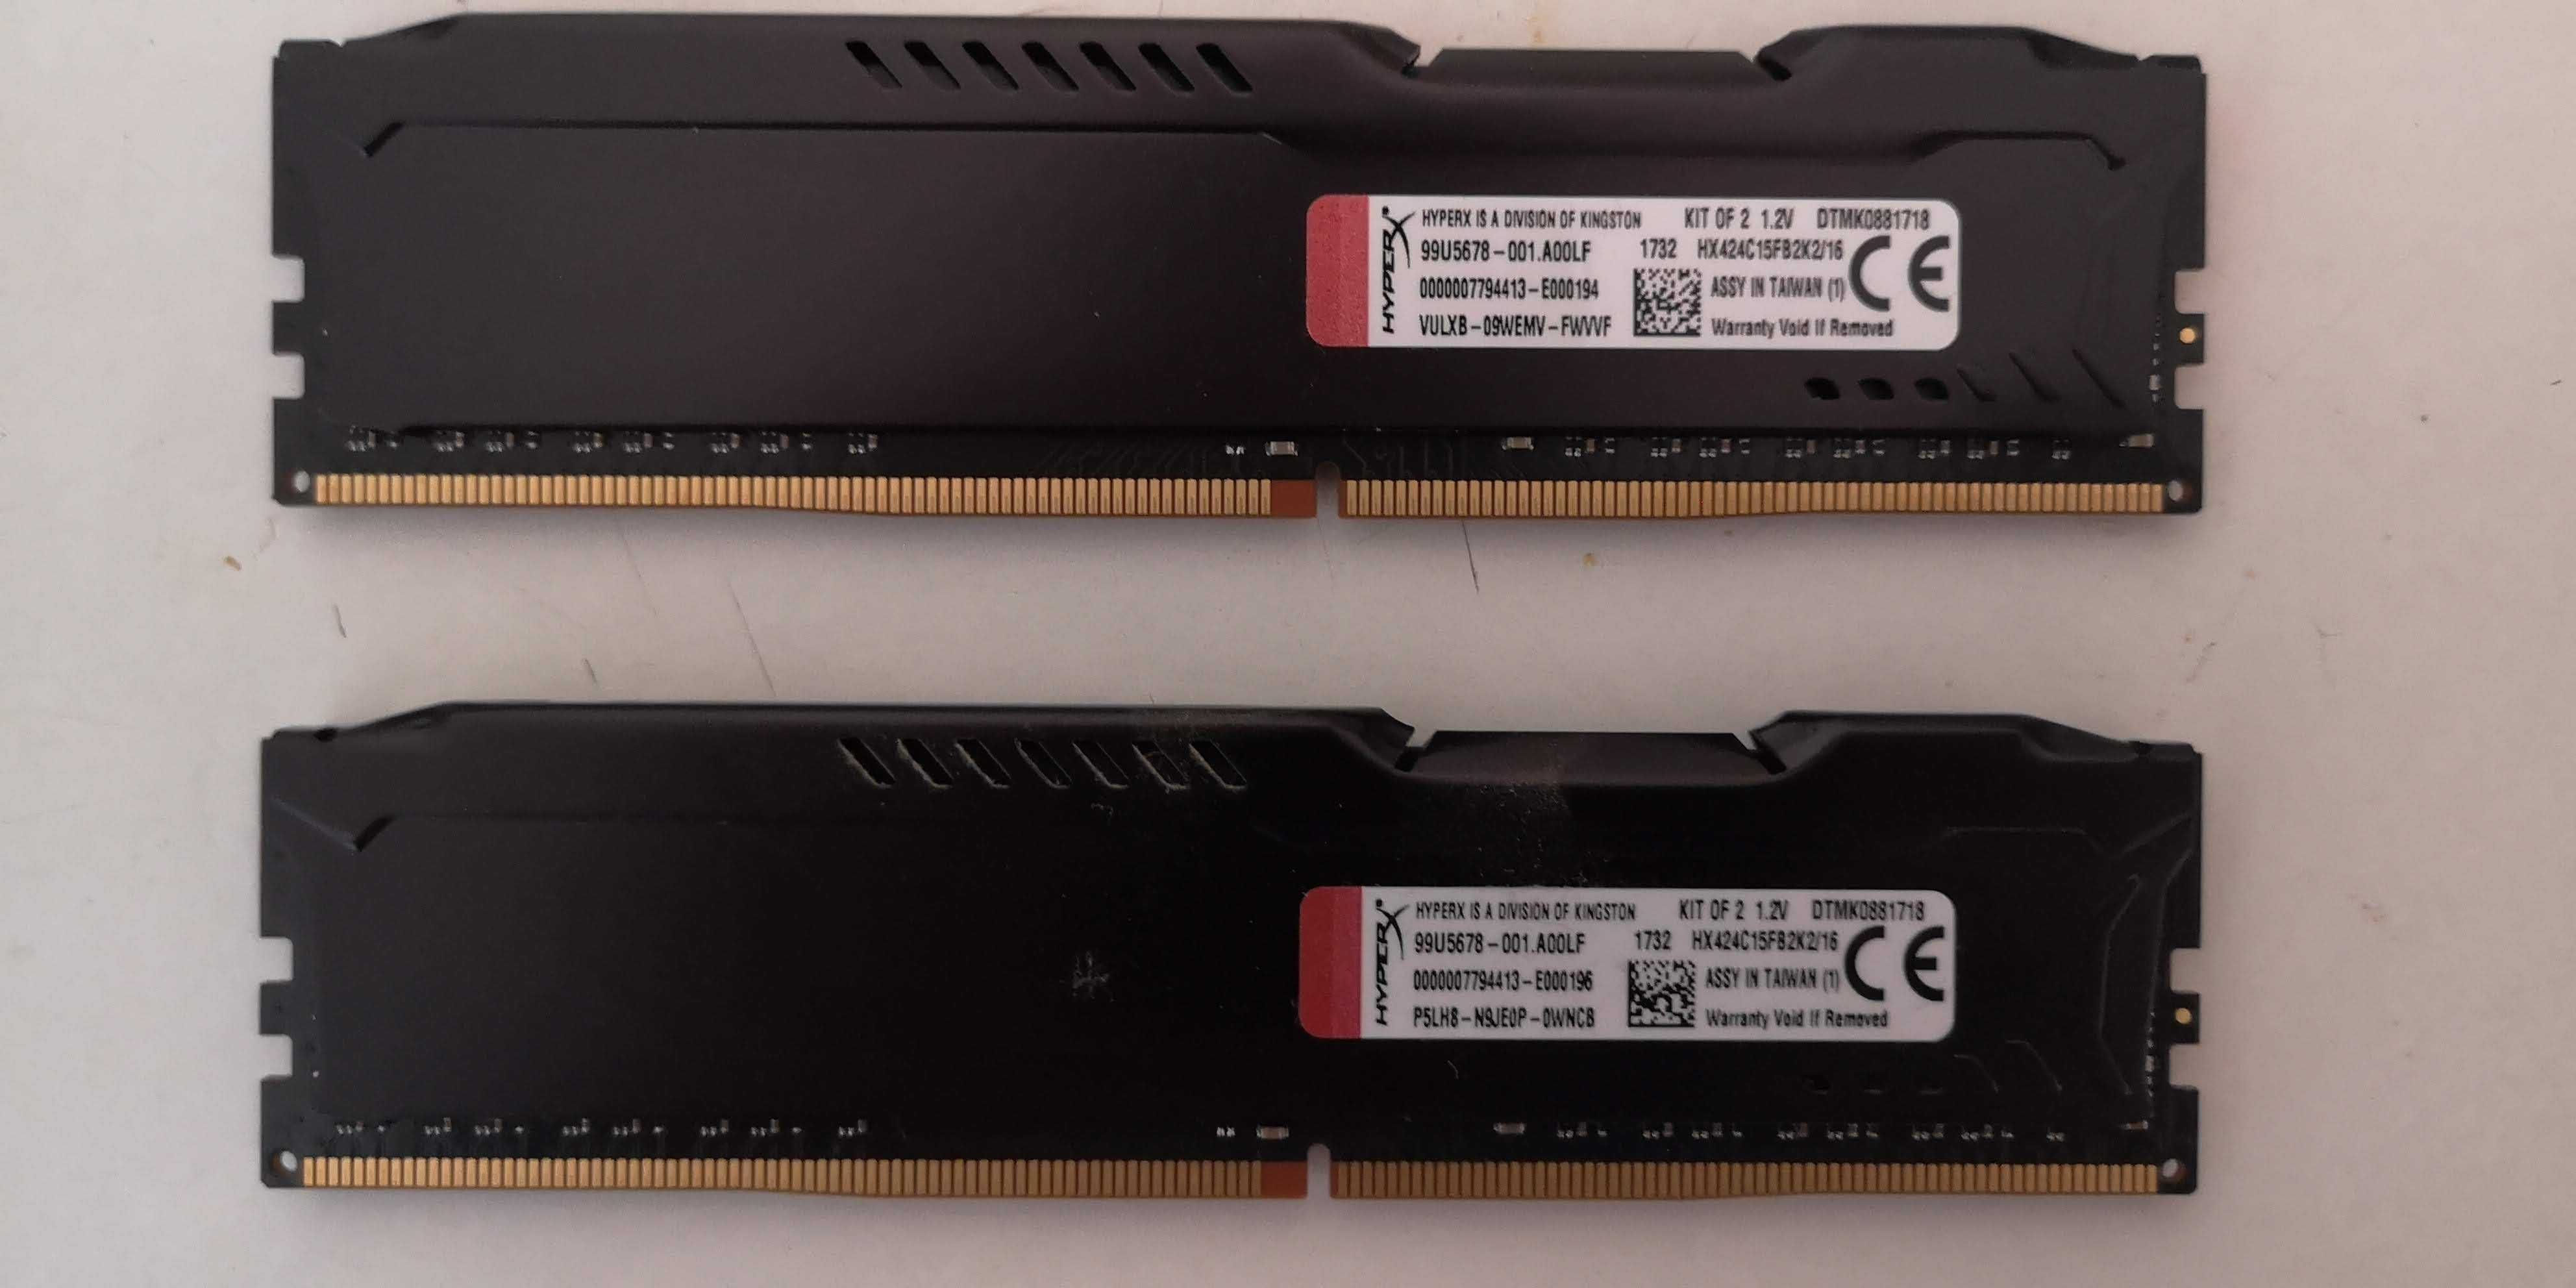 AMD Ryzen 7 1700 + 16GB RAM + Sound Blaster Z